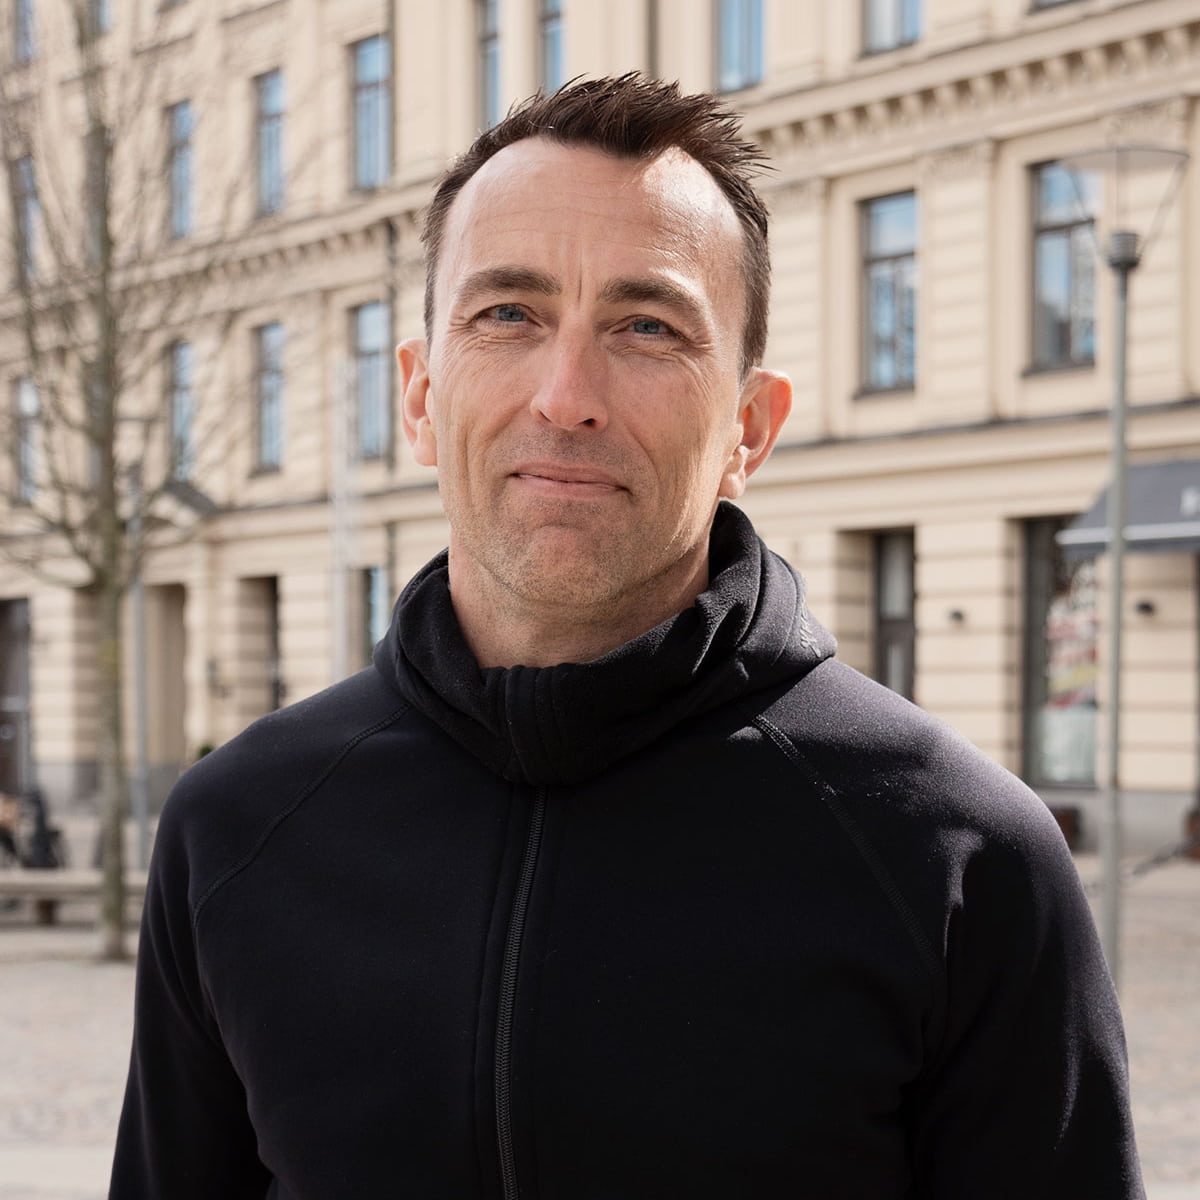 Profilbild på Anders Green i Stockholm